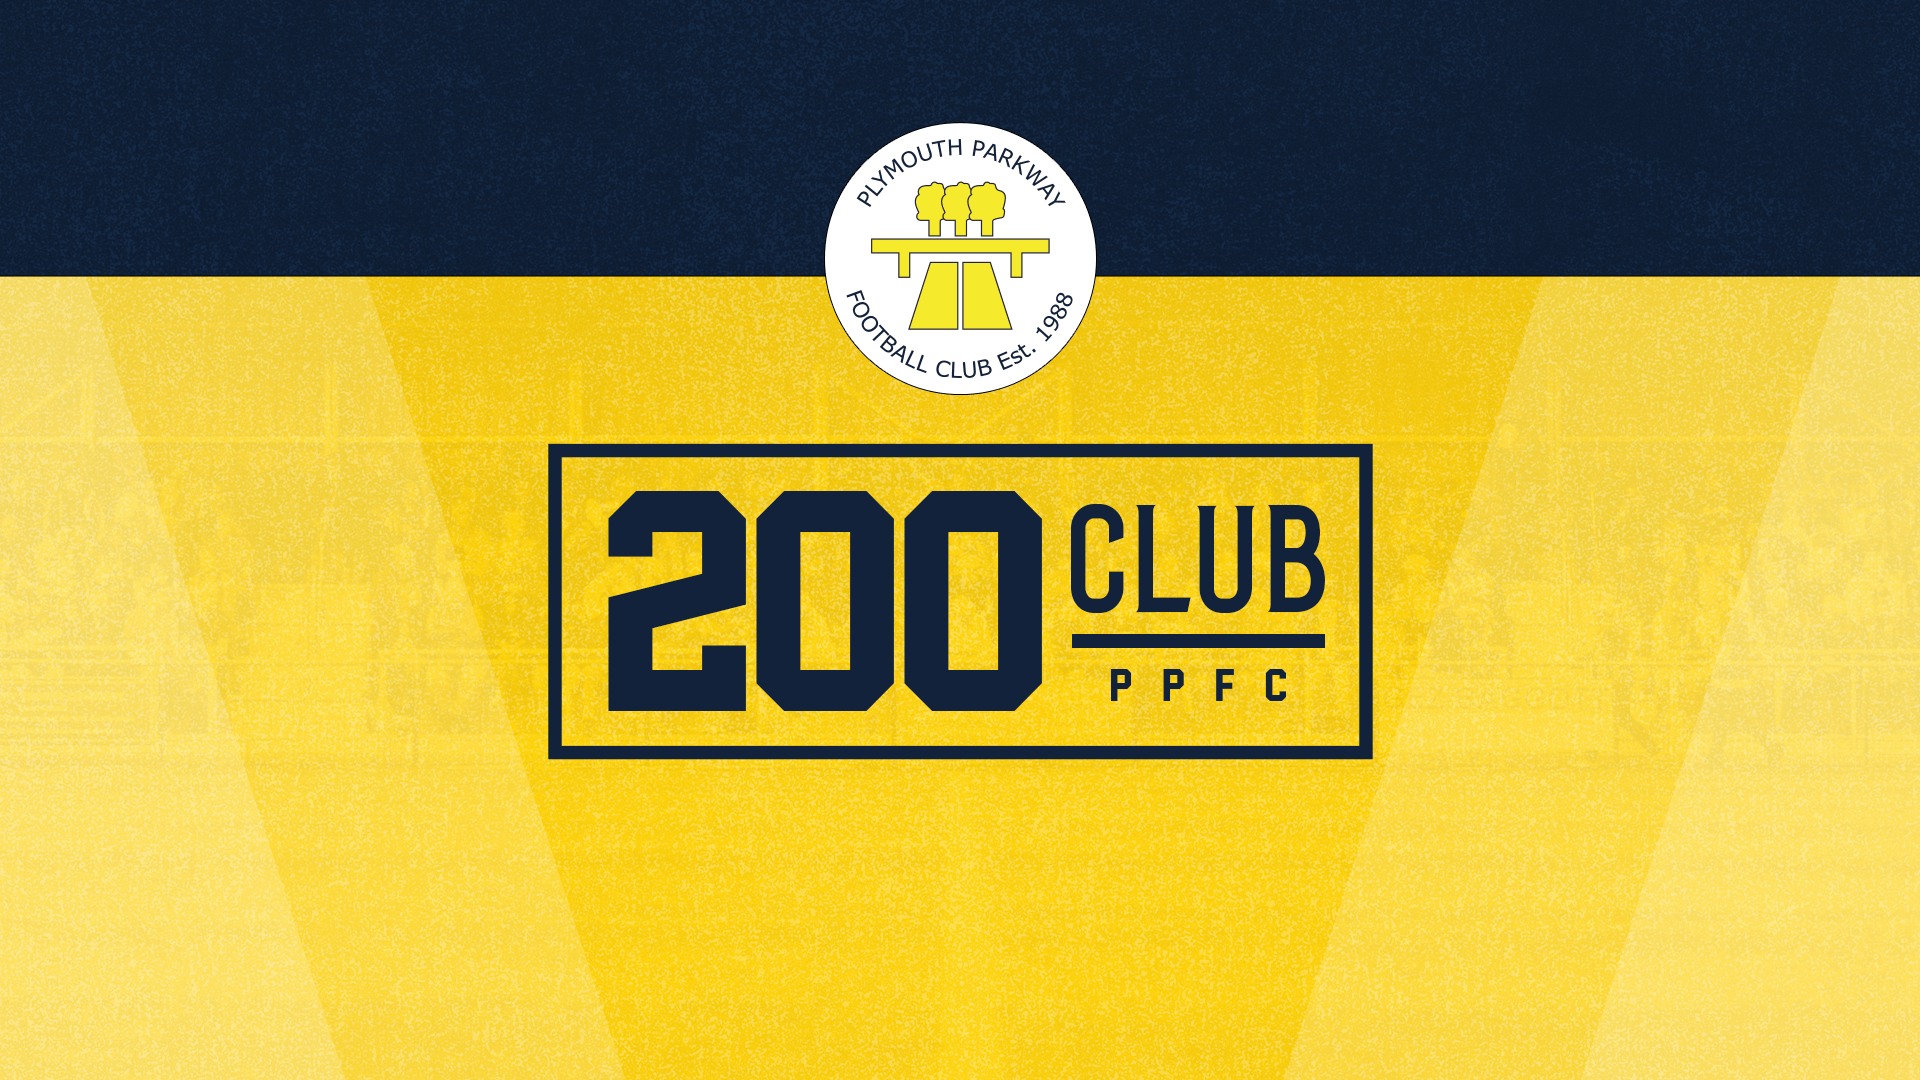 The PPFC 200 Club